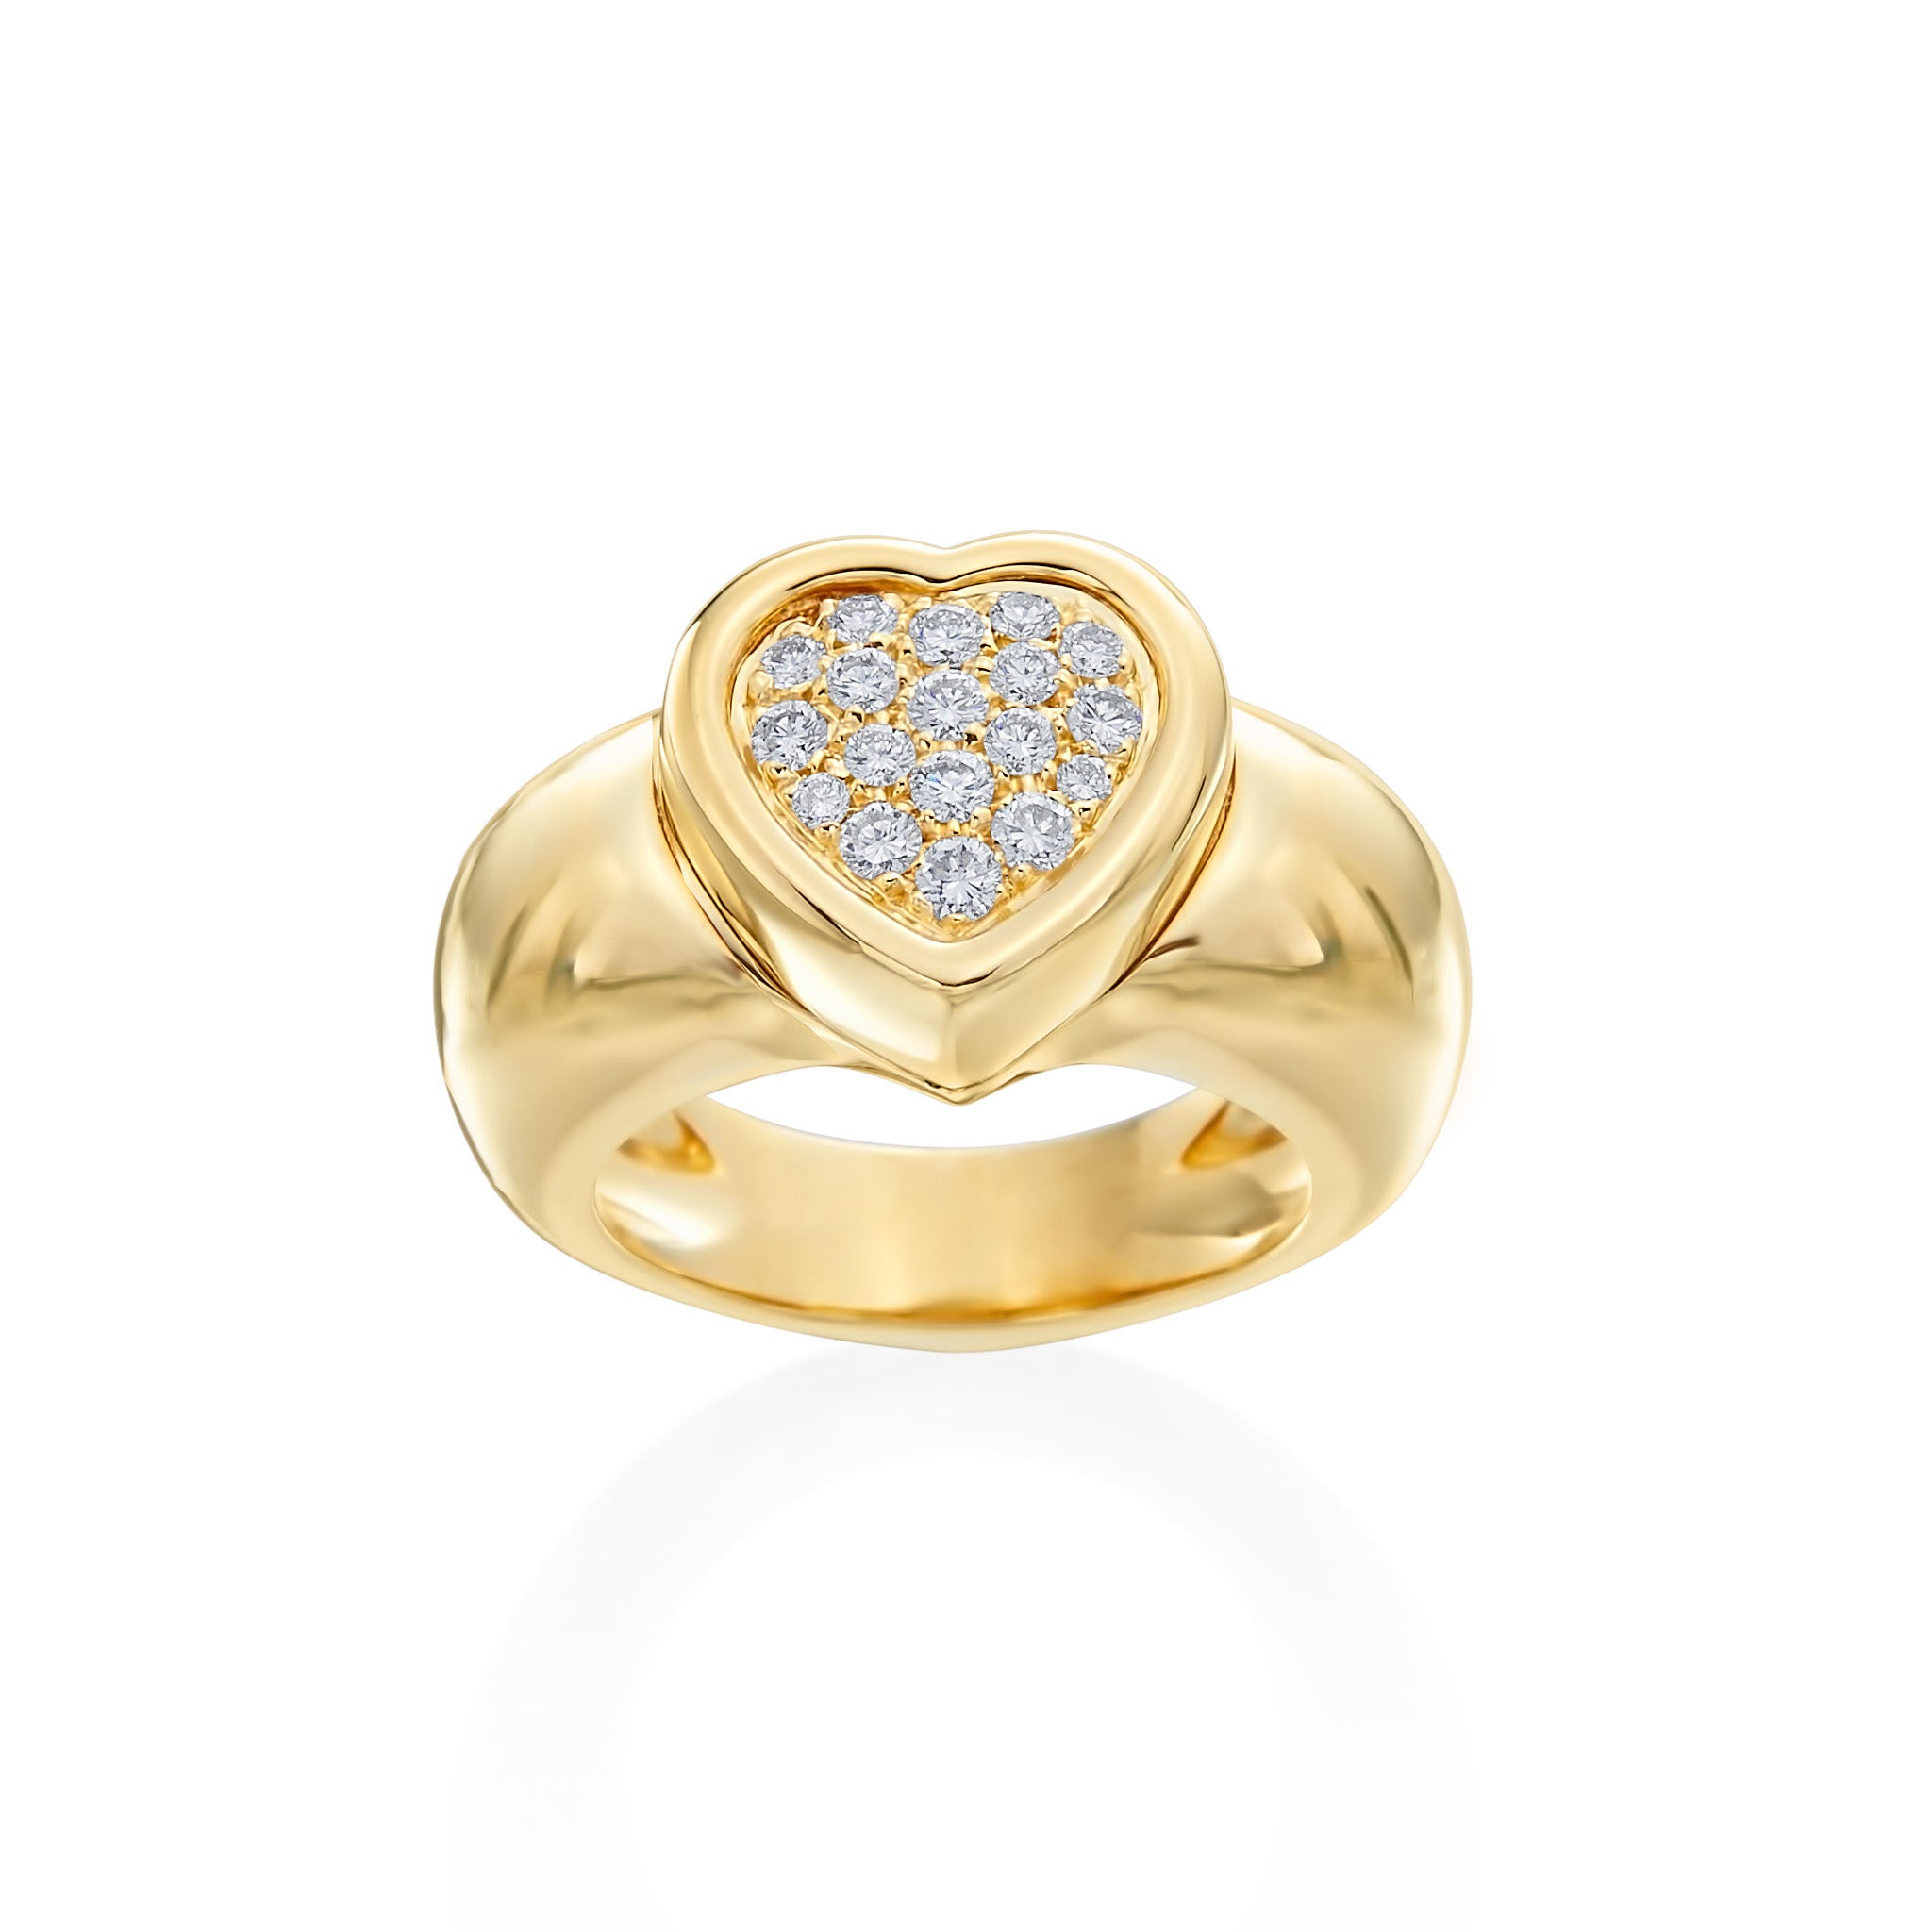 Piaget Diamond and 18k Gold Ring